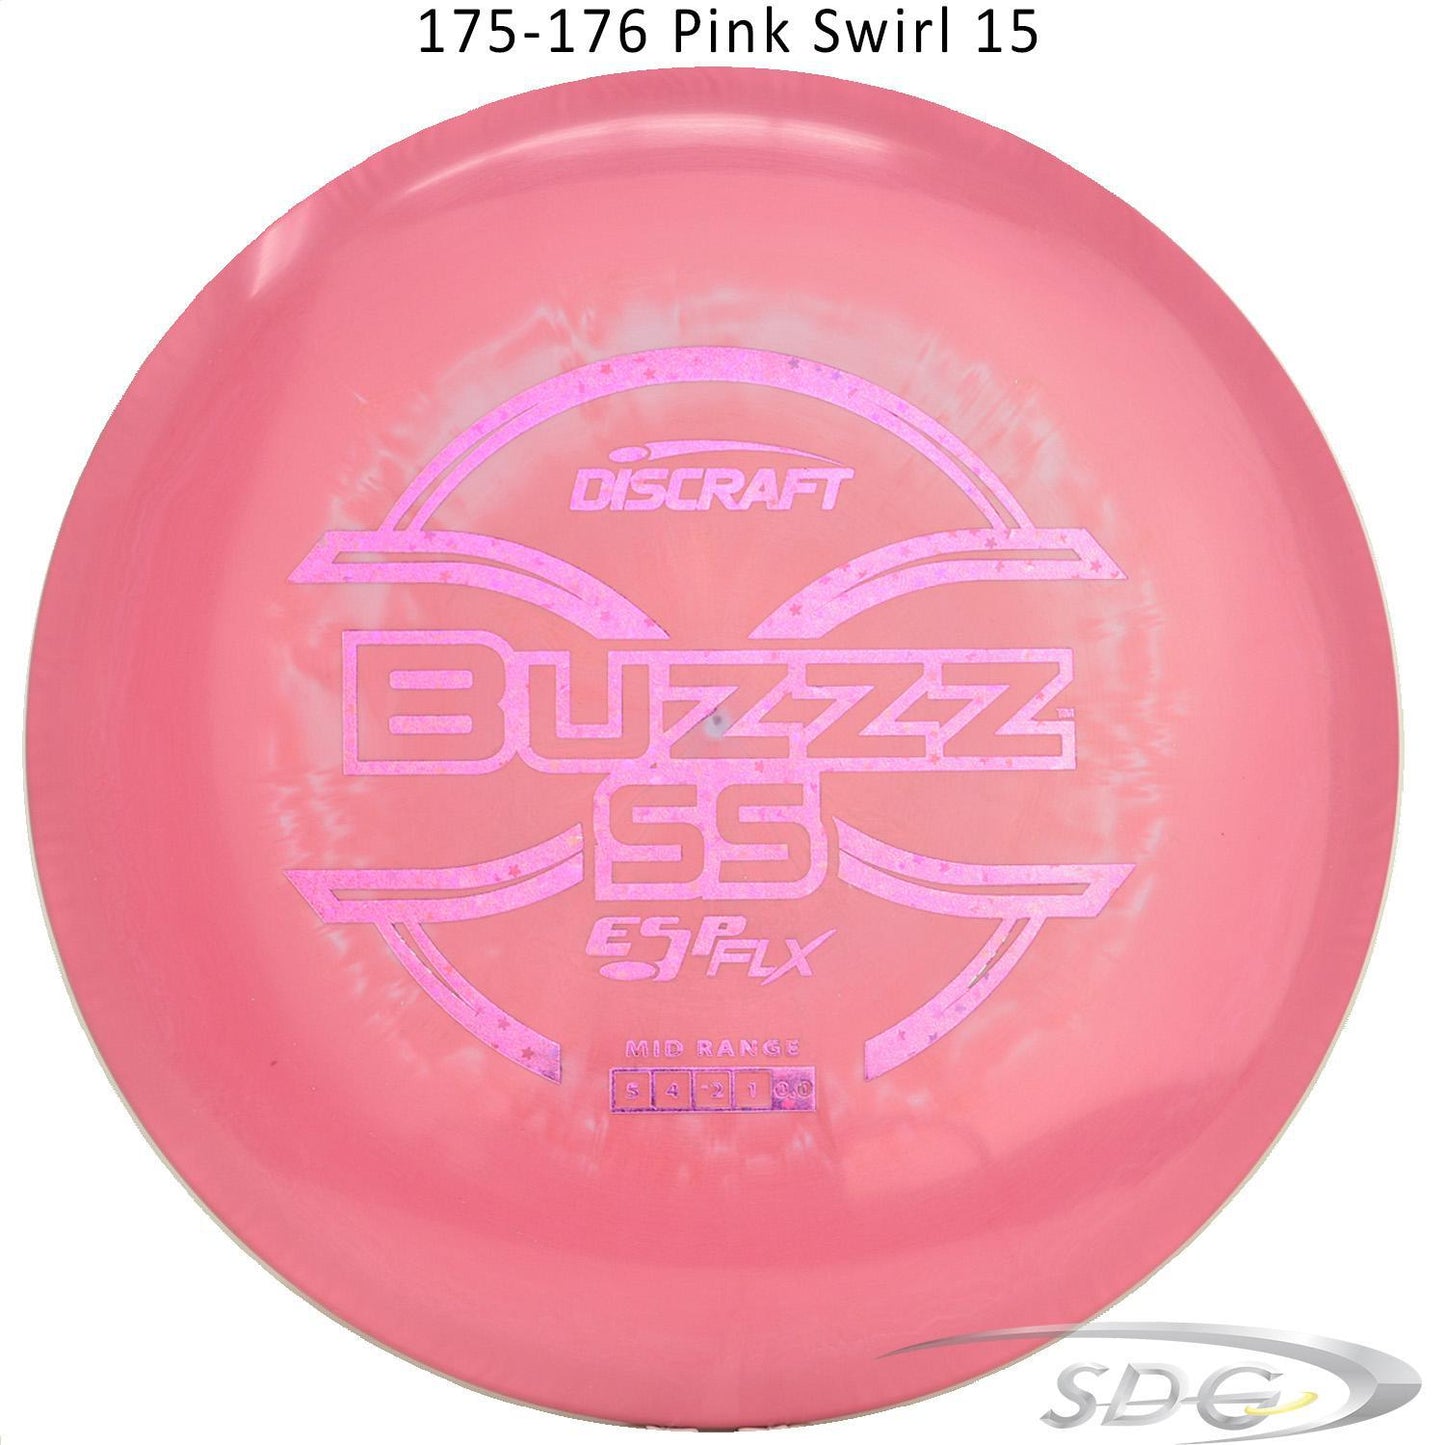 discraft-esp-flx-buzzz-ss-disc-golf-mid-range 175-176 Pink Swirl 15 